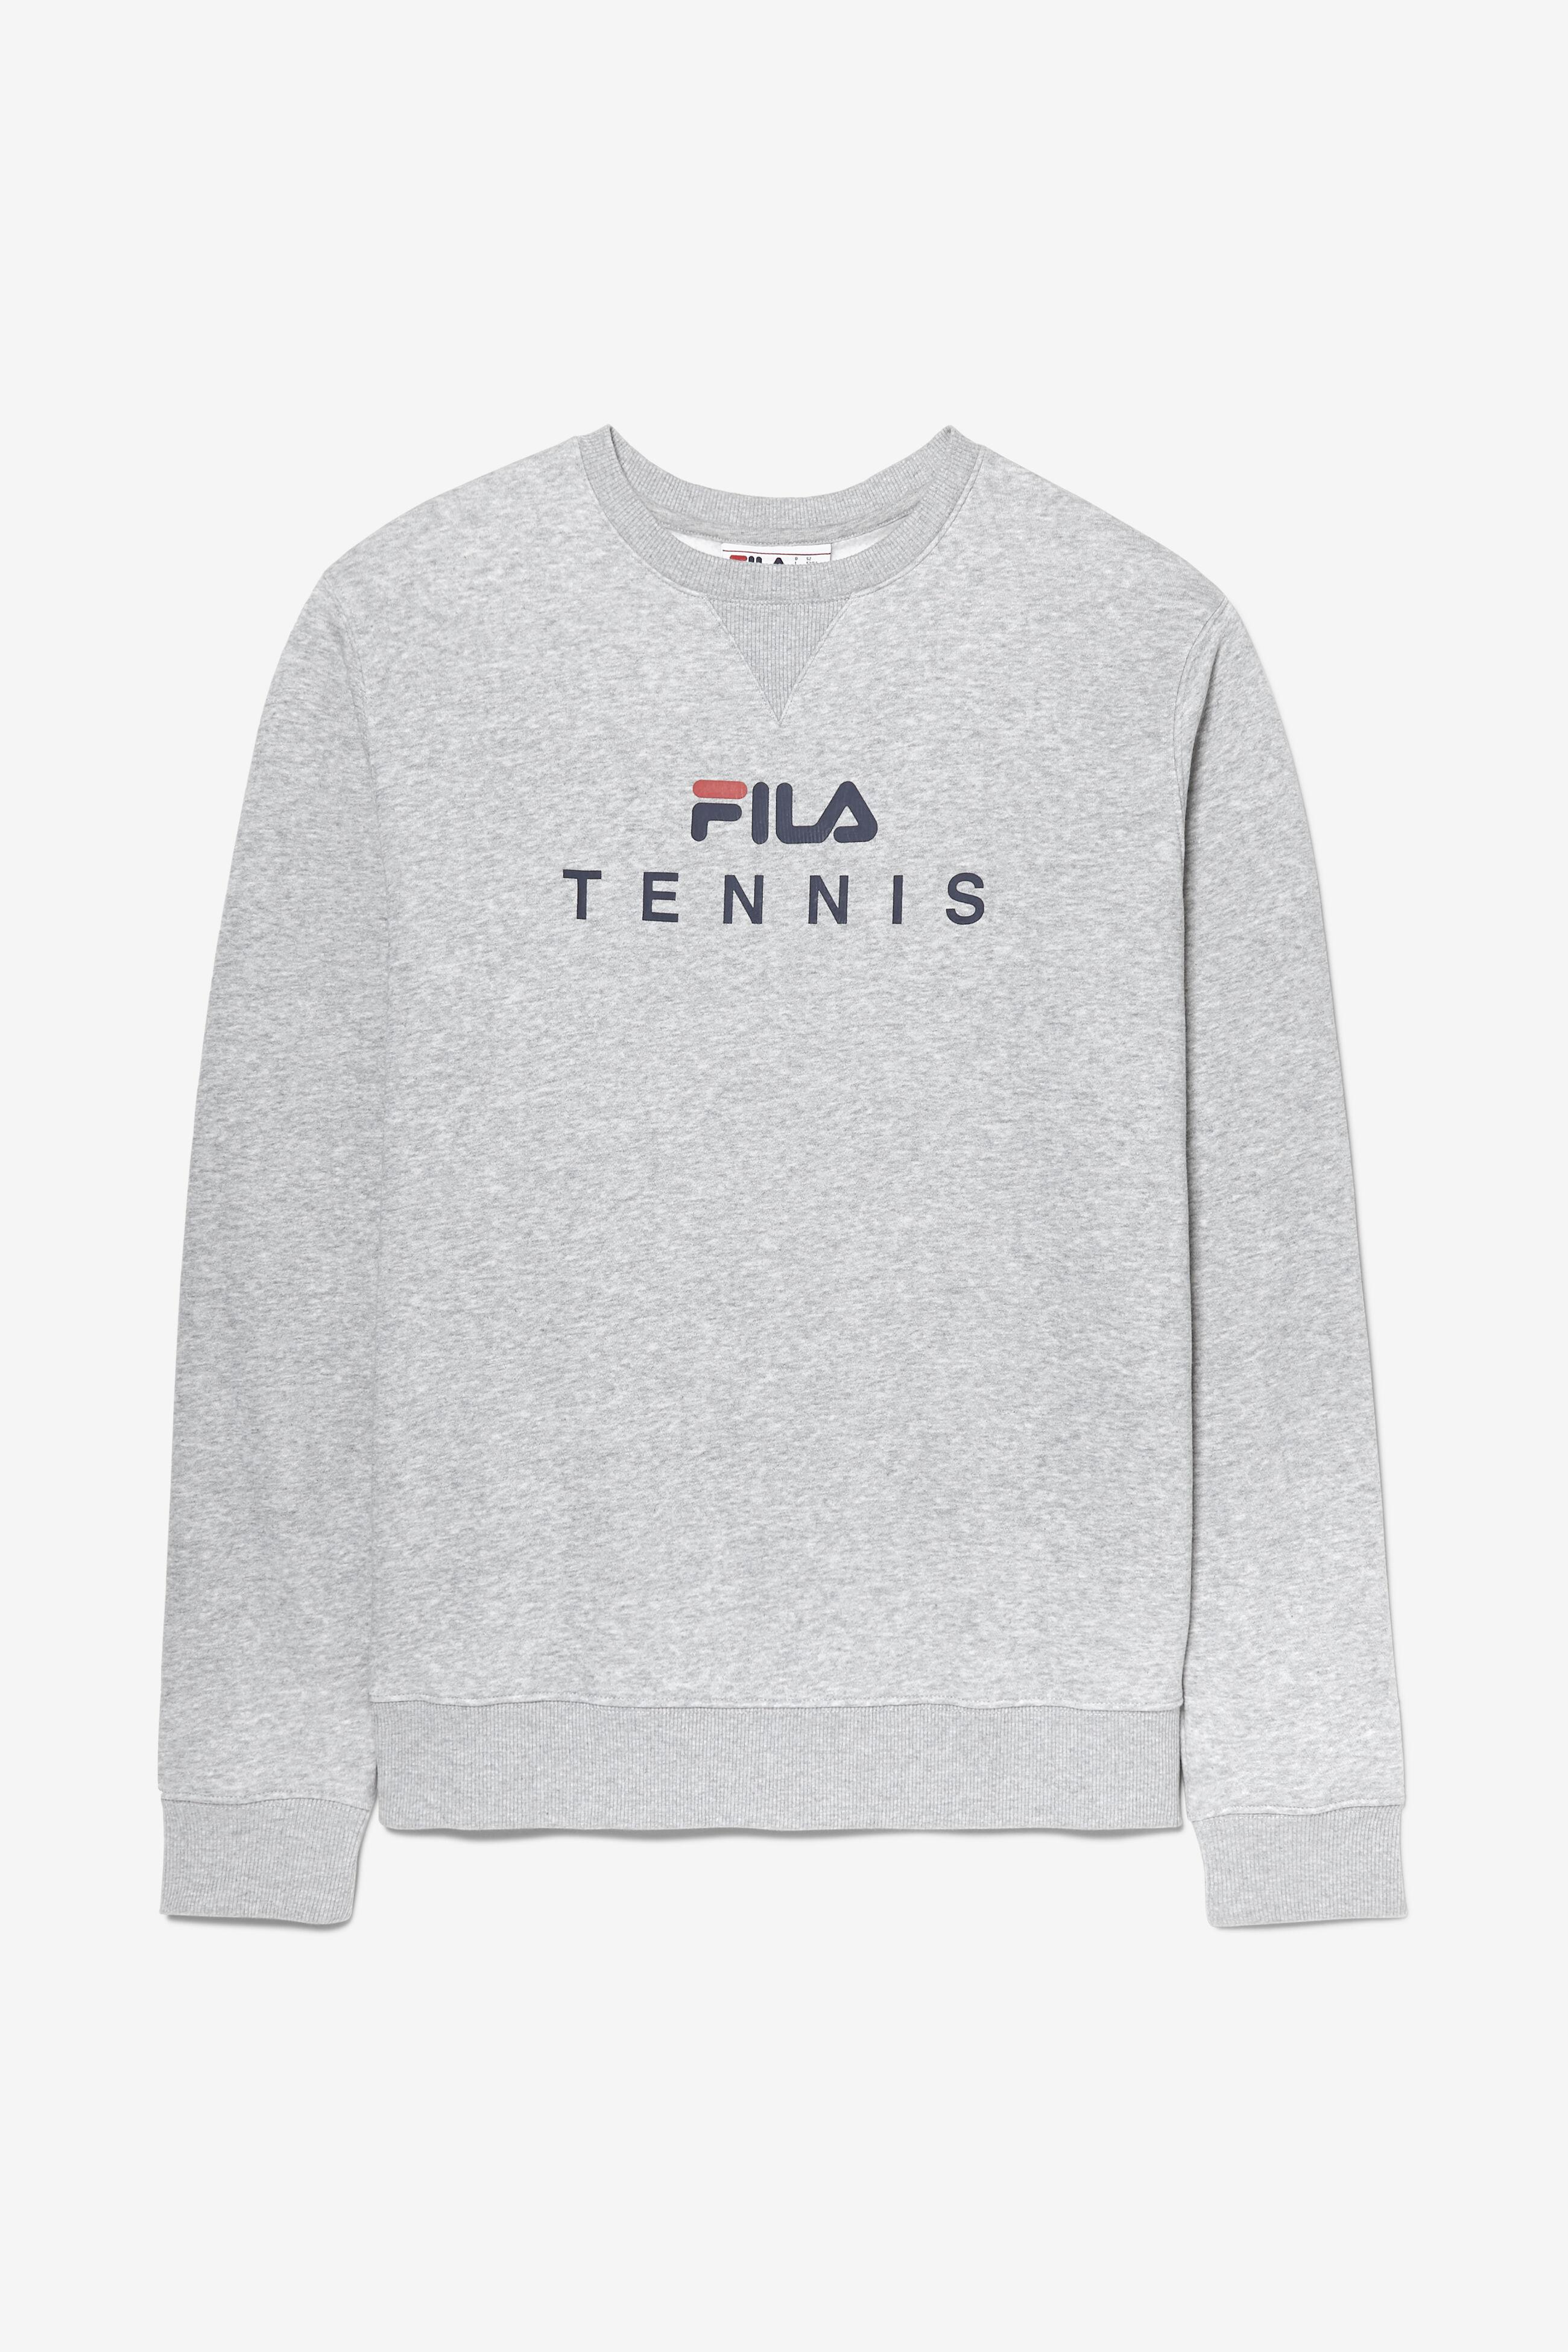 Fila Unisex Tennis Crewneck Sweatshirt in Gray | Lyst